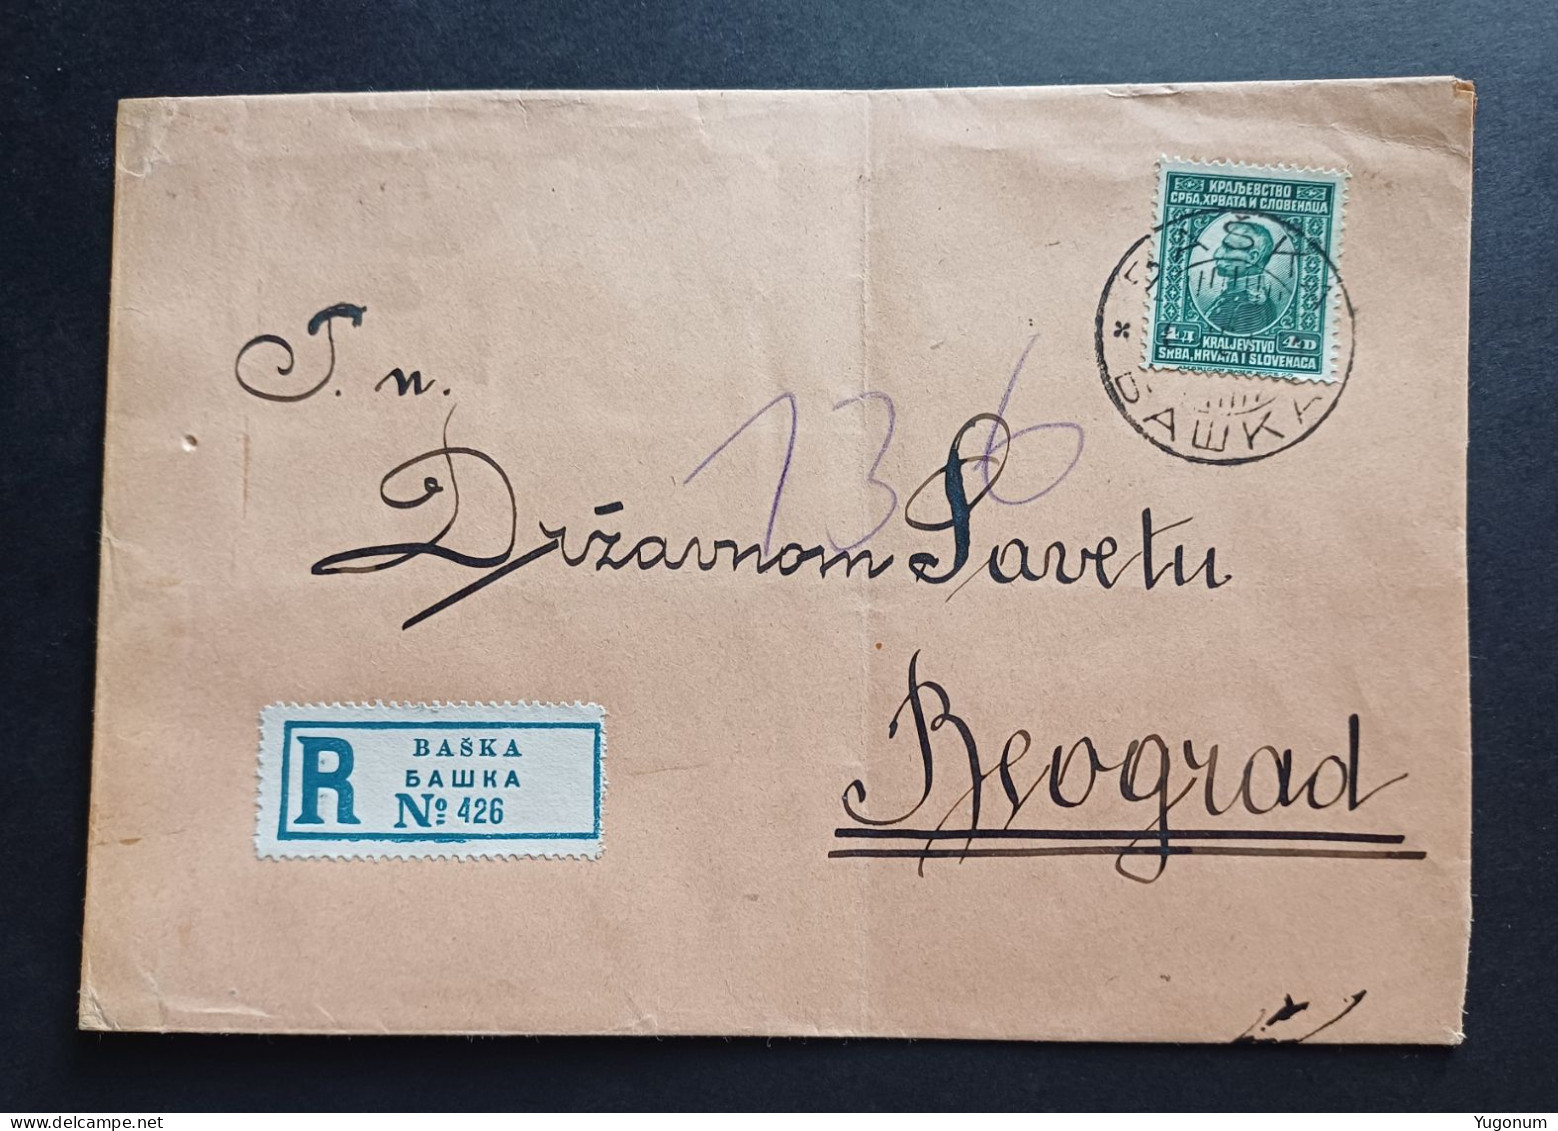 Yugoslavia Kingdom , Croatia 1920's R Letter With Stamp And R Label BAŠKA (No 3108) - Briefe U. Dokumente